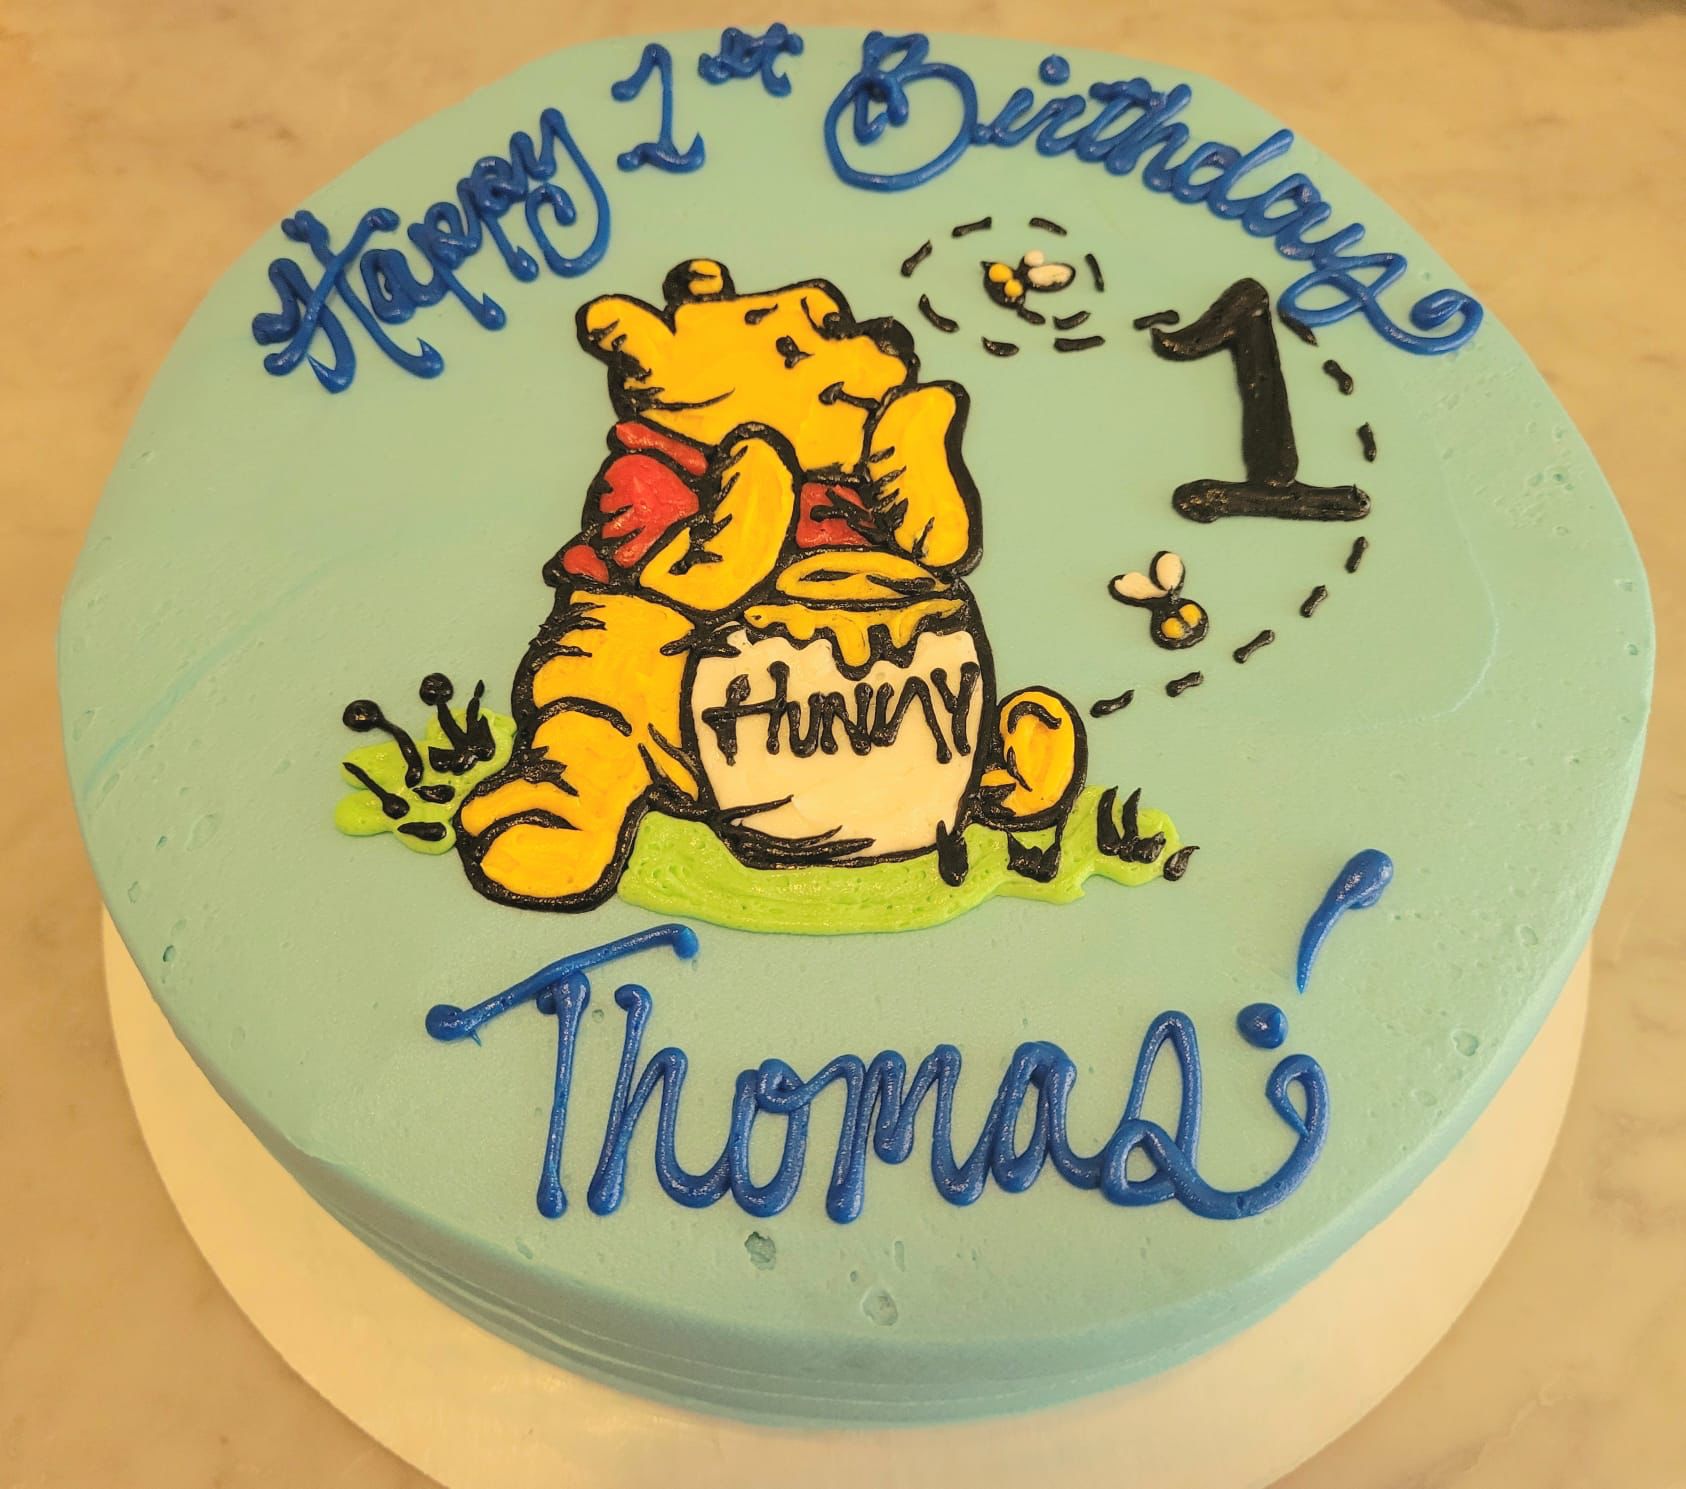 happy birthday cakes by Cake Marque- Happy birthday cake with name